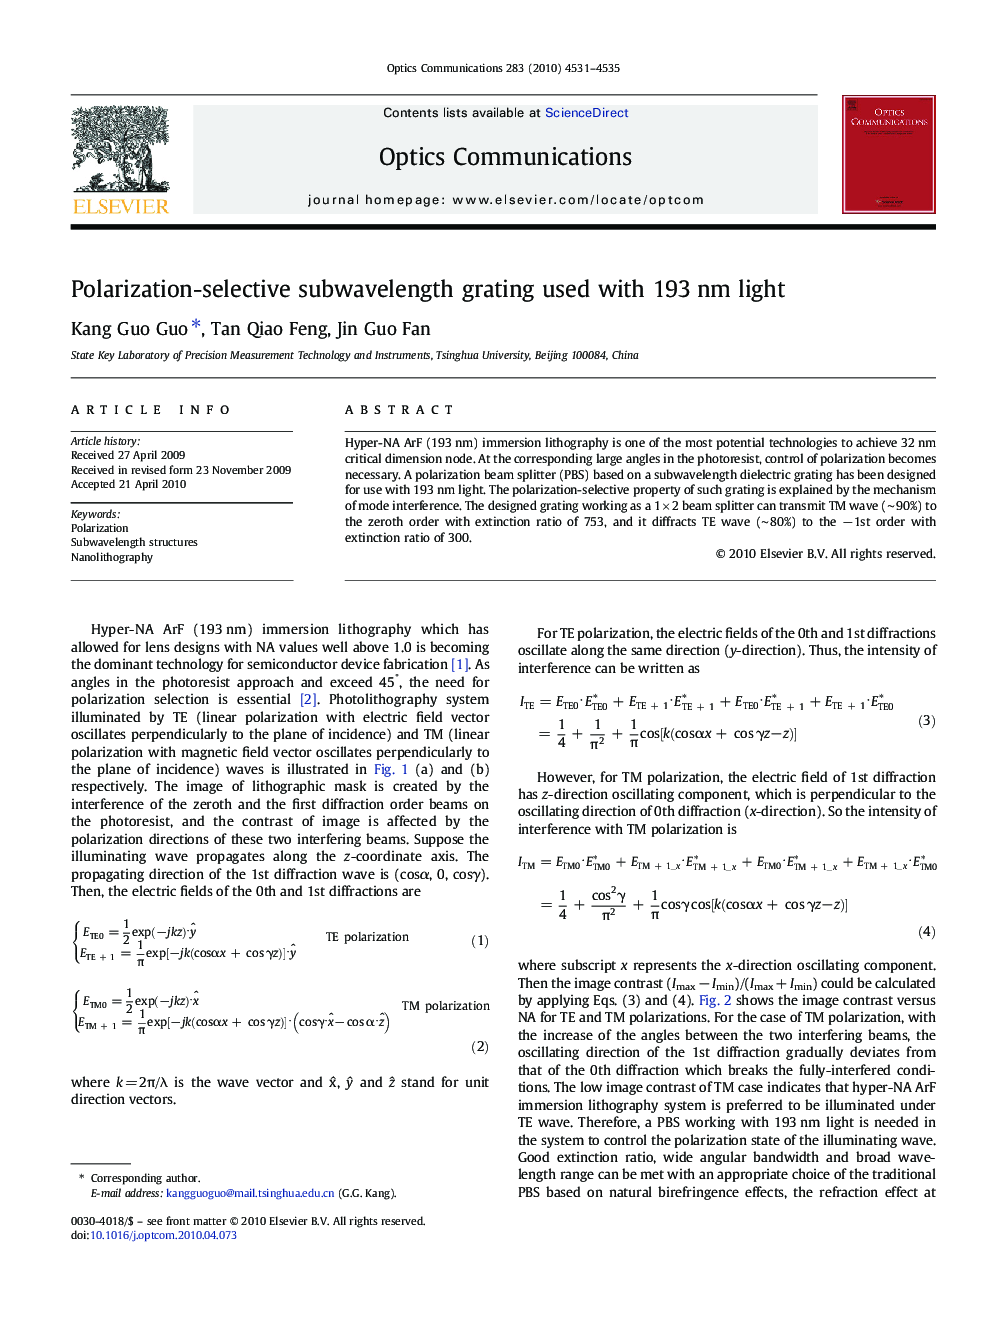 Polarization-selective subwavelength grating used with 193 nm light